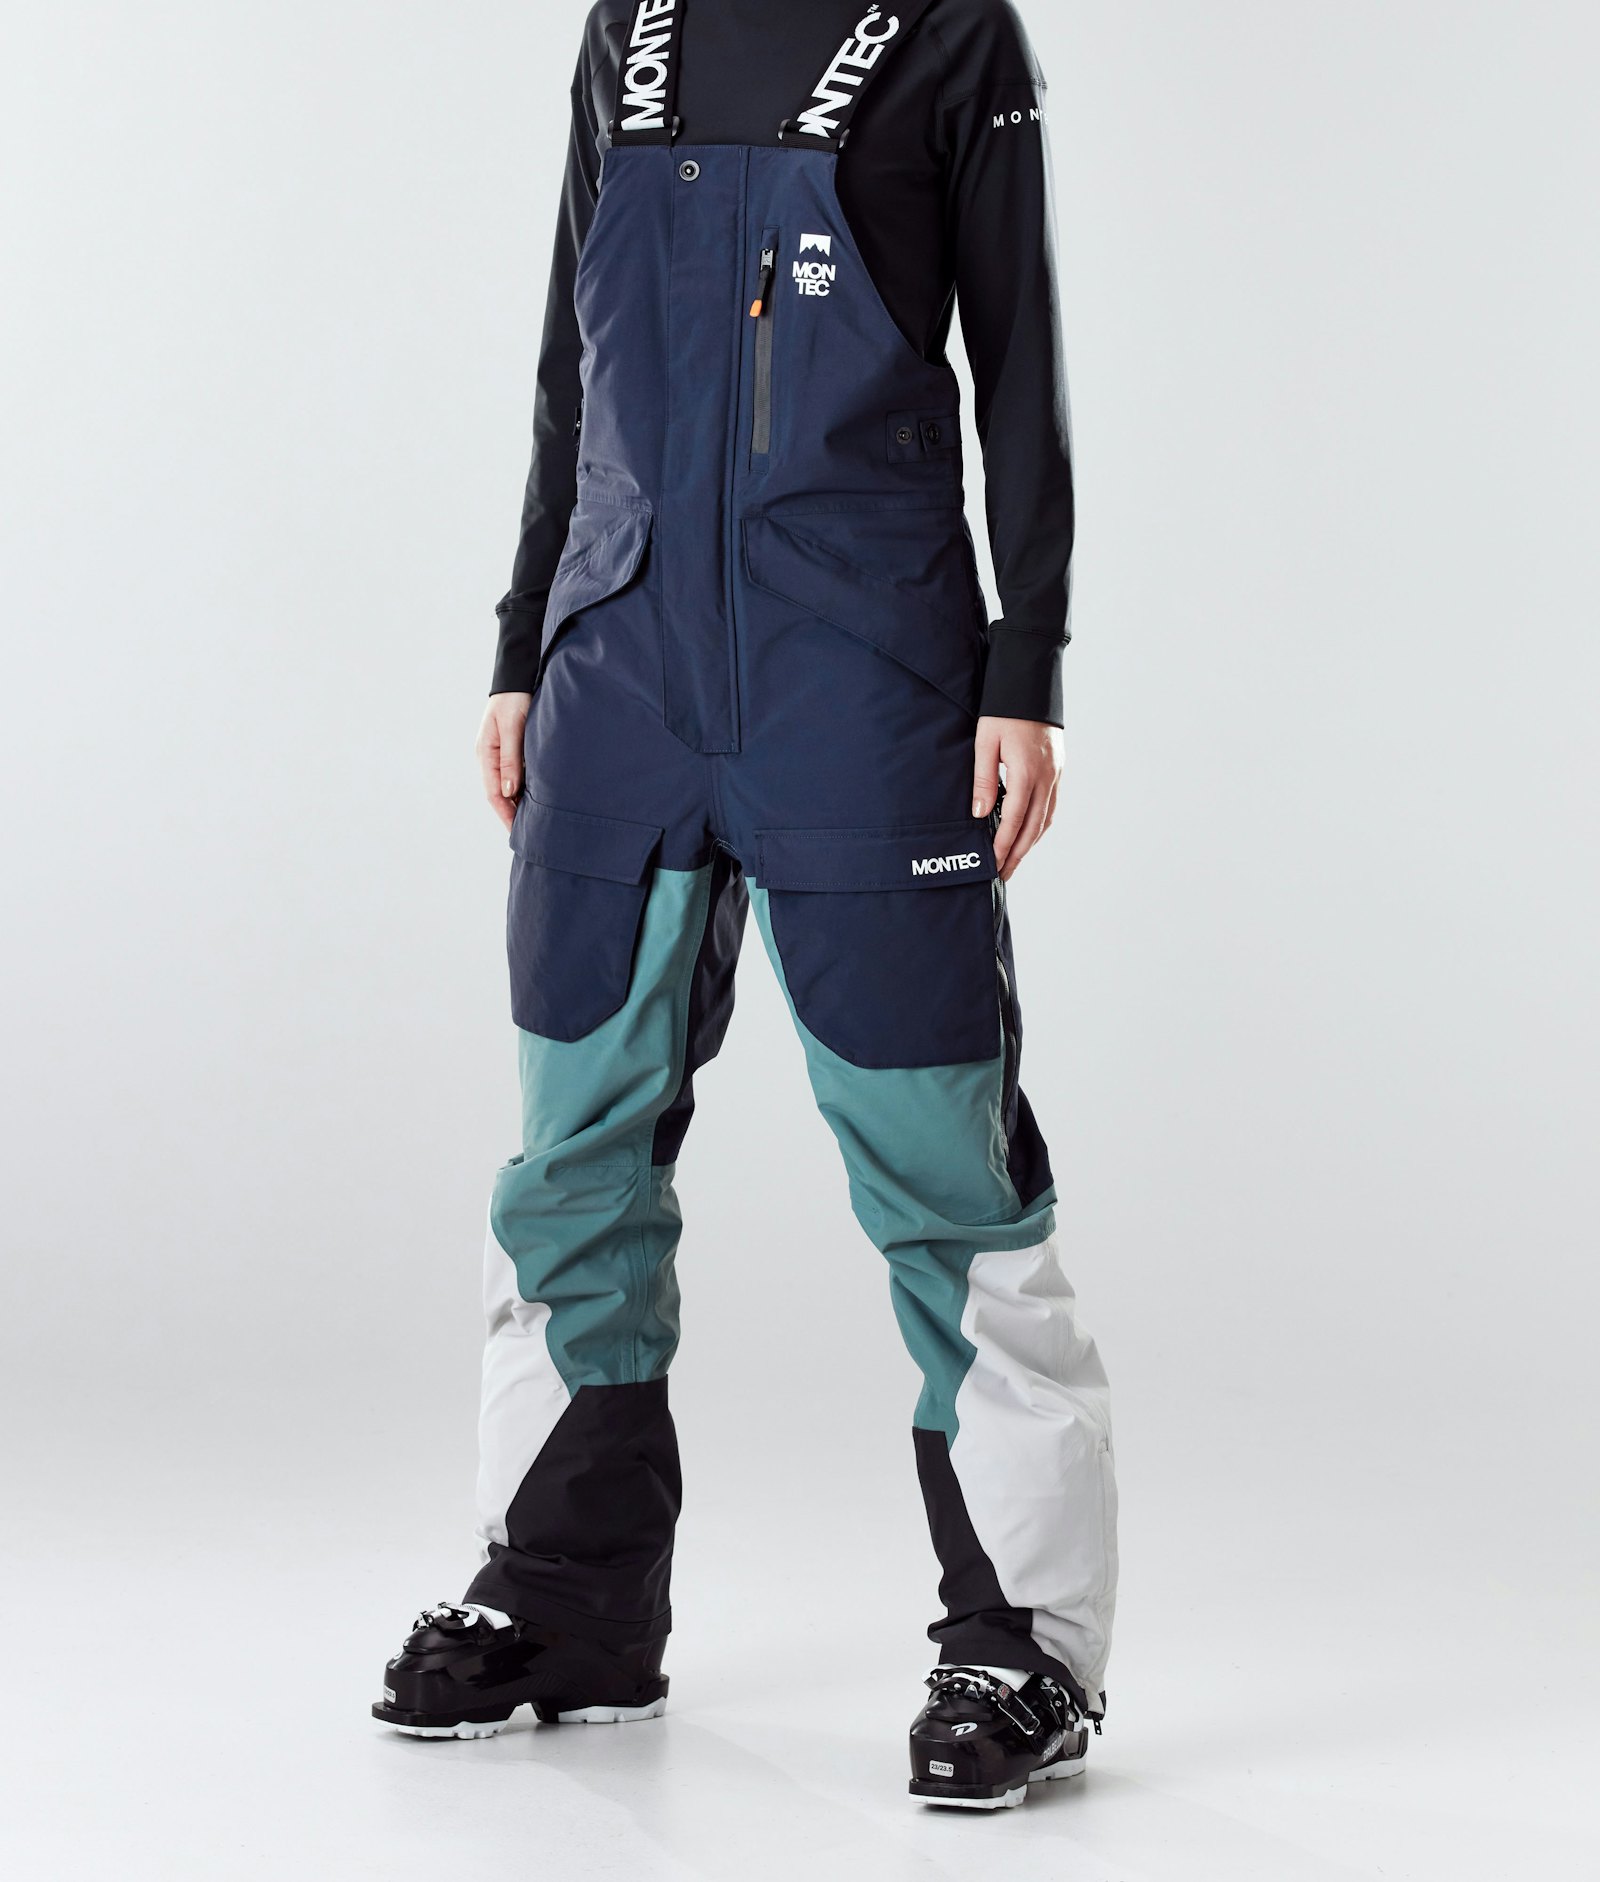 Fawk W 2020 Pantalon de Ski Femme Marine/Atlantic/Light Grey